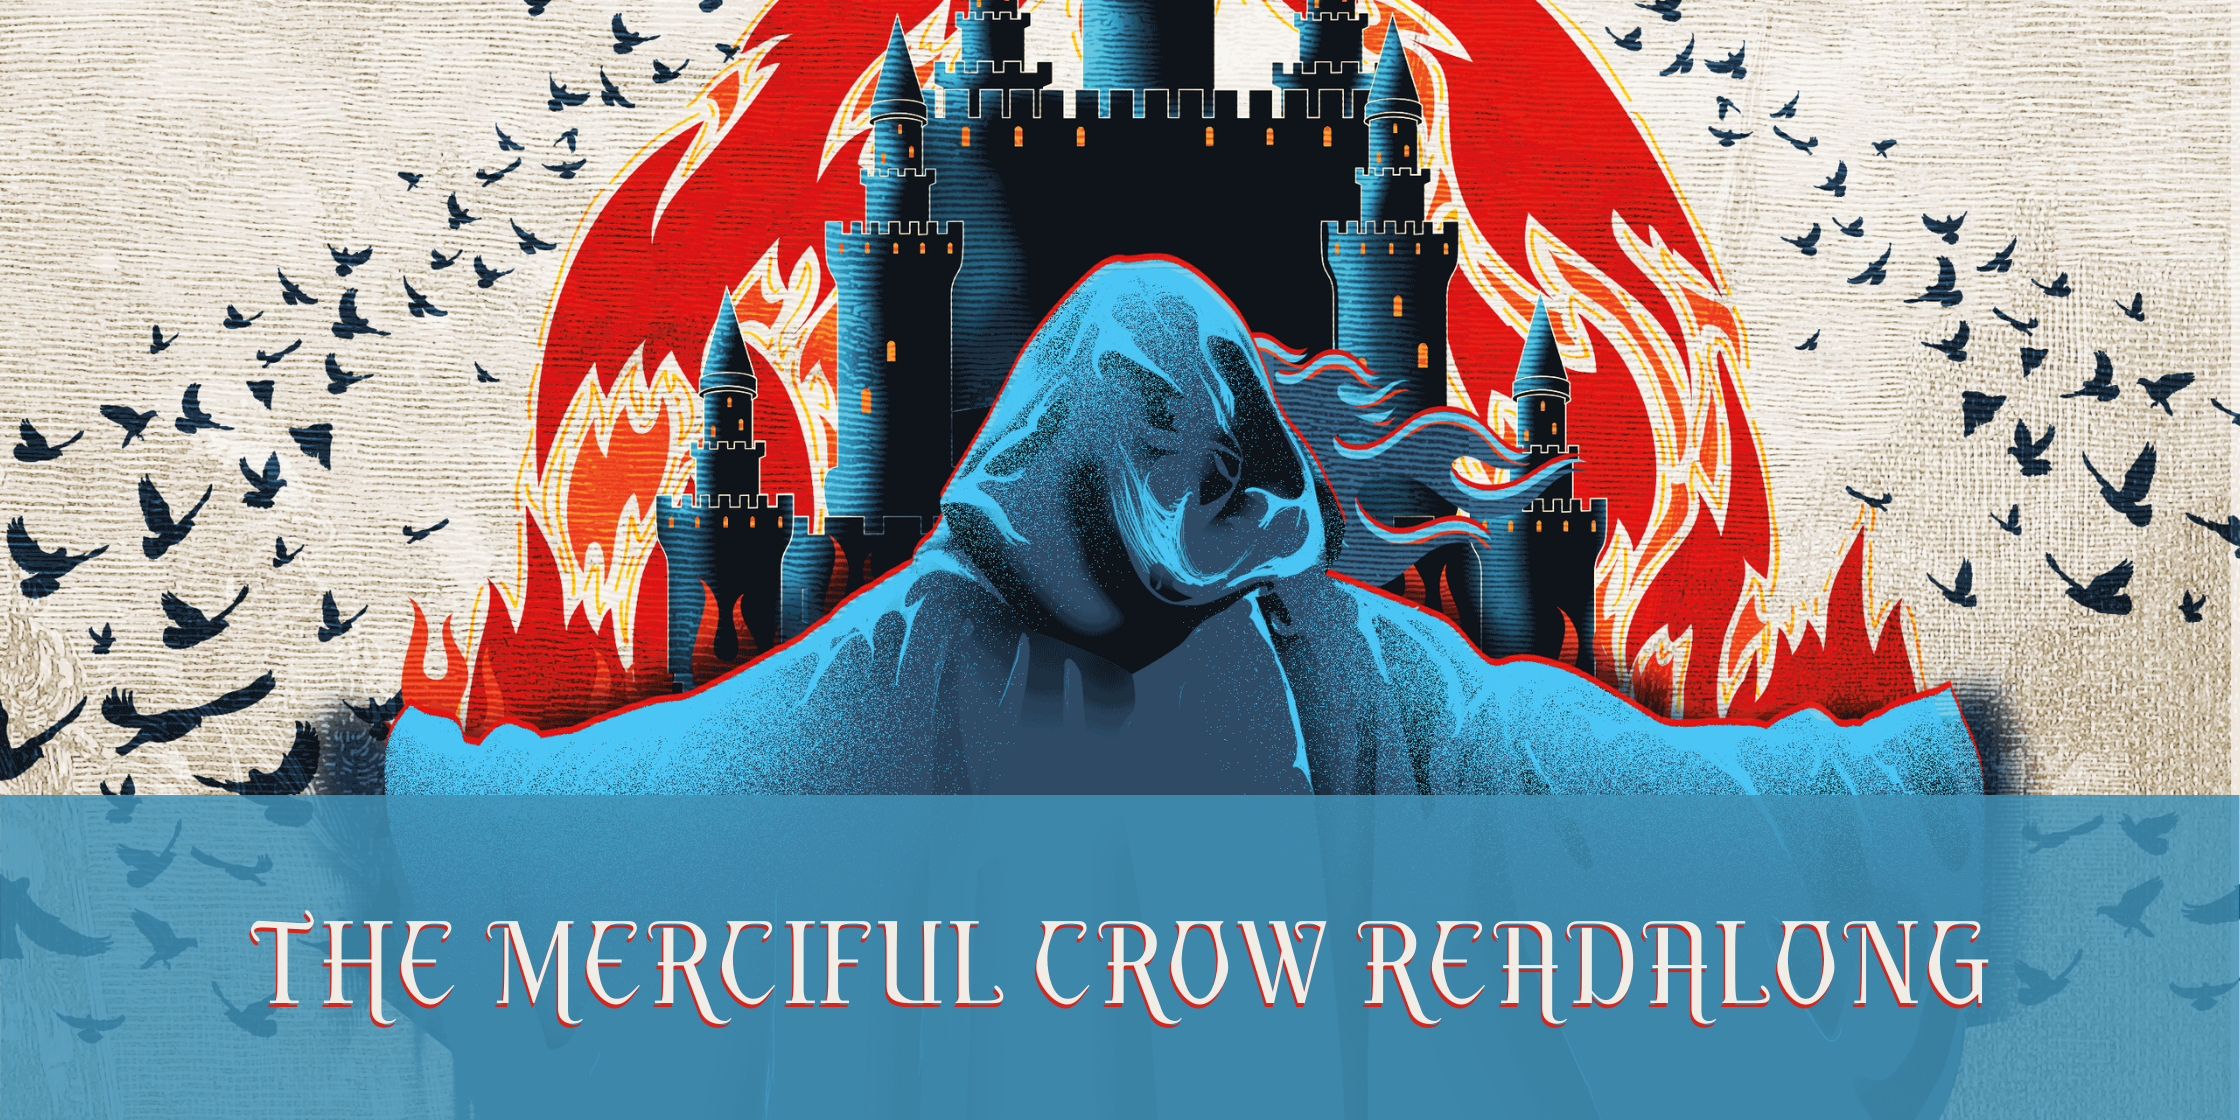 The Merciful Crow Readalong